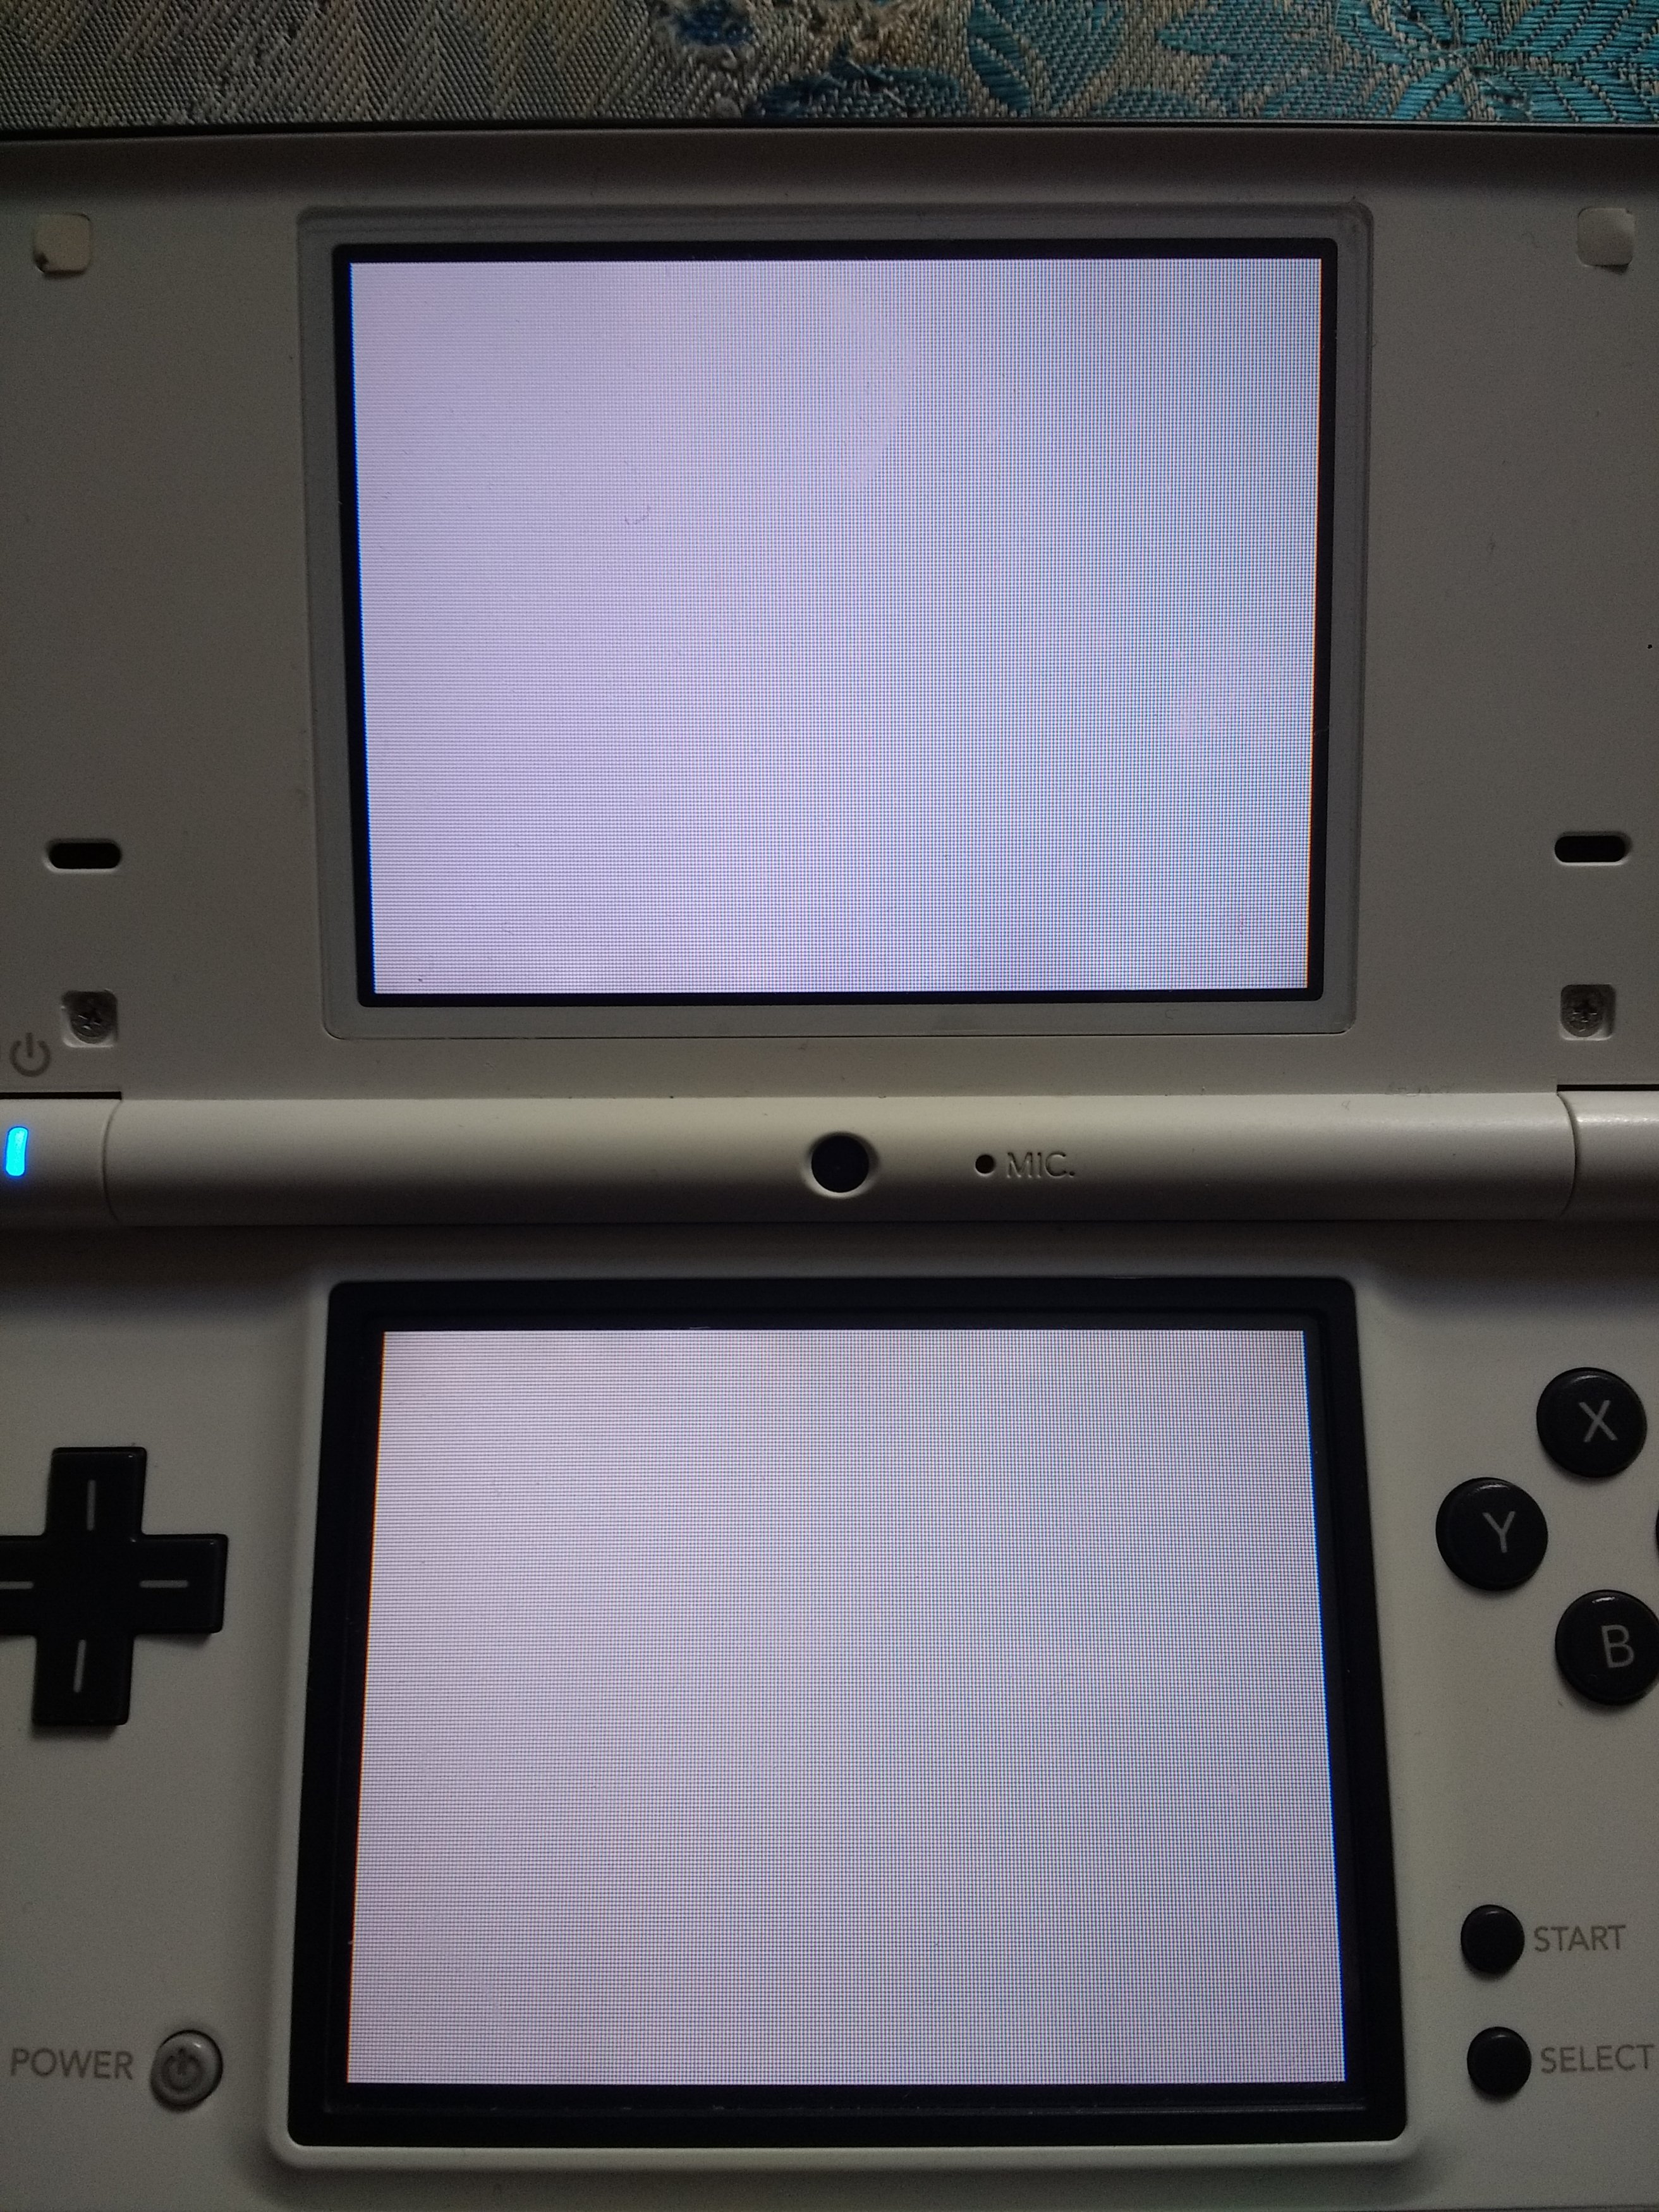 Okamiden Nintendo DS Replacement Case No Game 